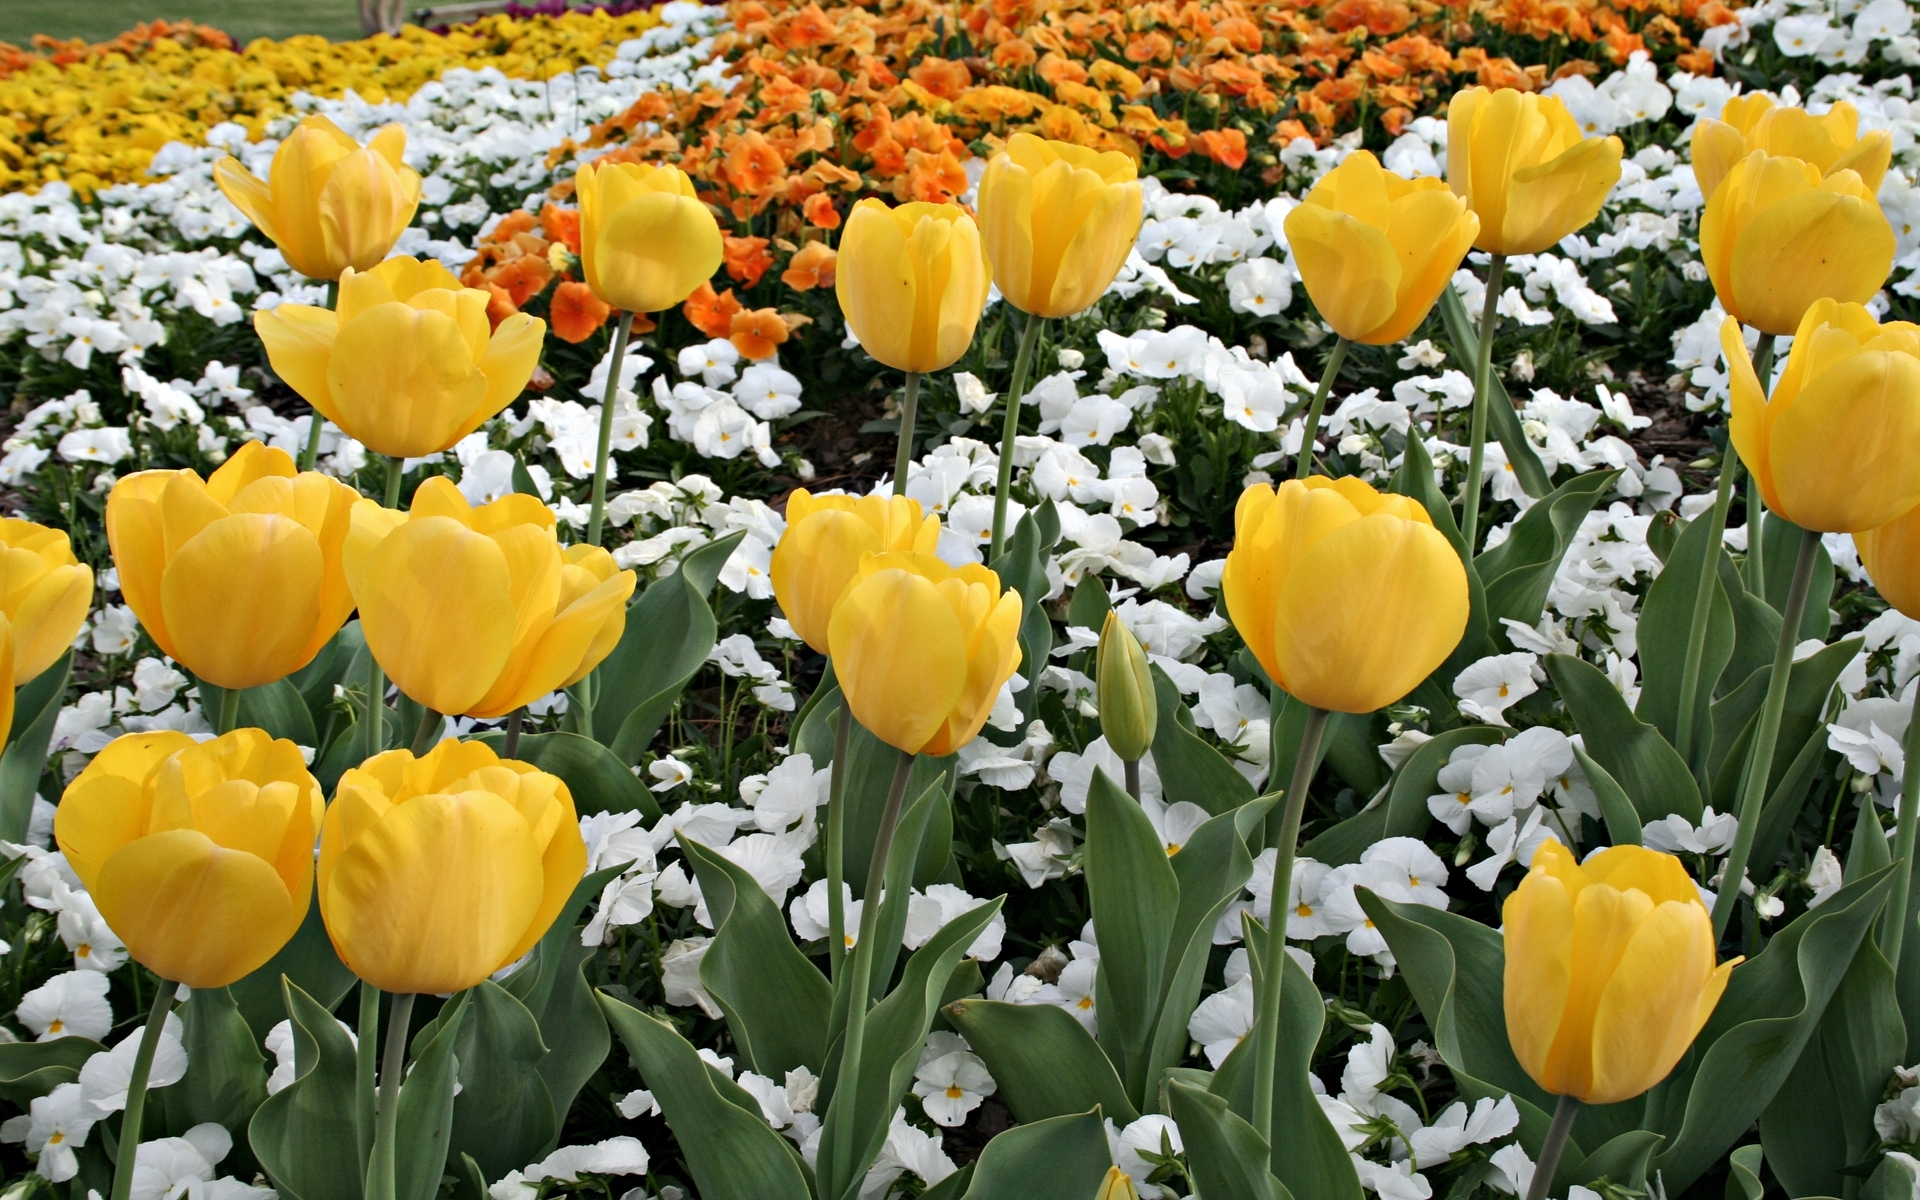 Descarga gratuita de fondo de pantalla para móvil de Plantas, Flores, Fondo, Tulipanes.